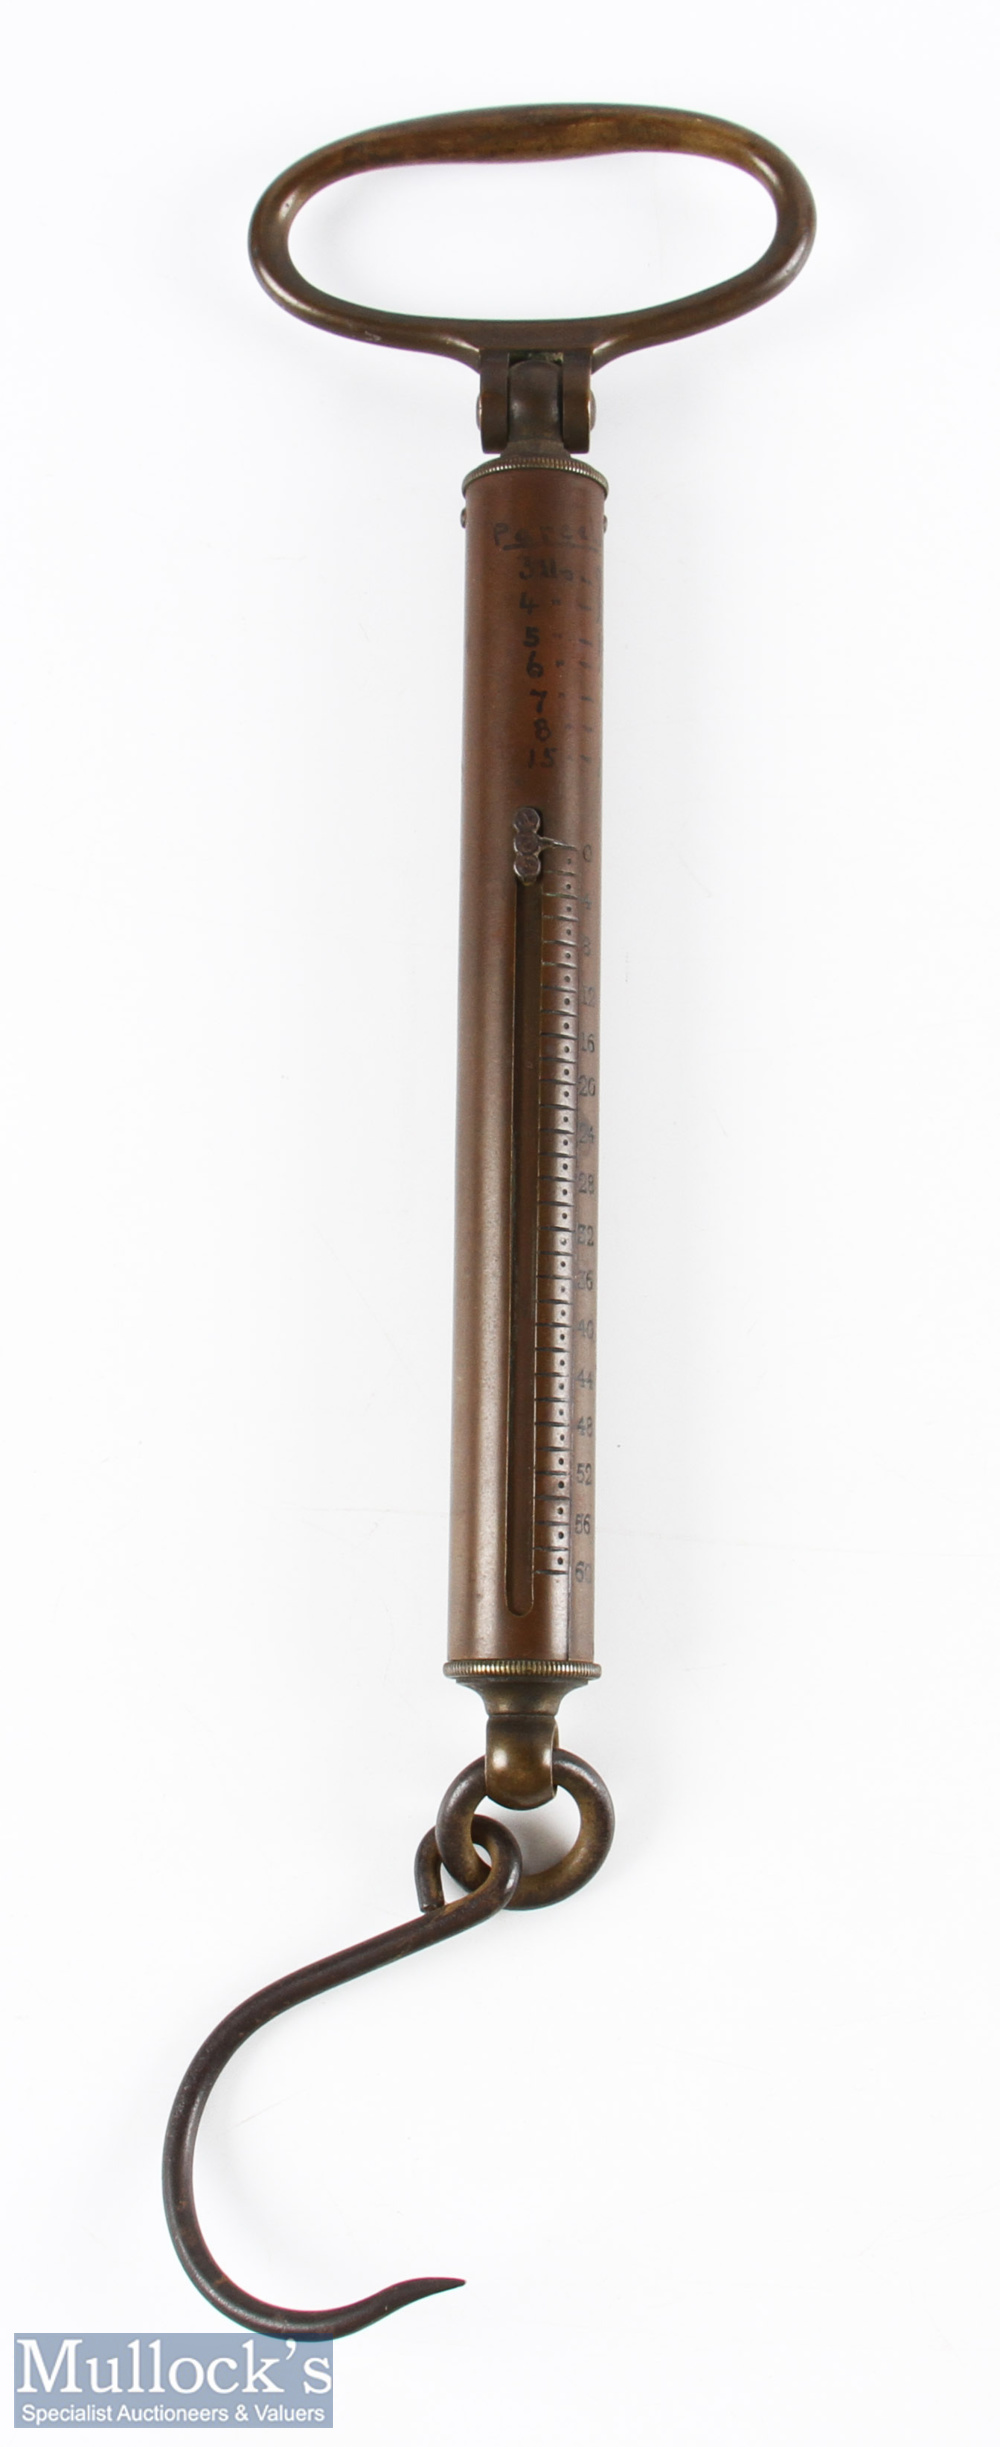 C Farlow London, salmon spring scales, 4-60lb in 4lb increments retaining original bronze finish,